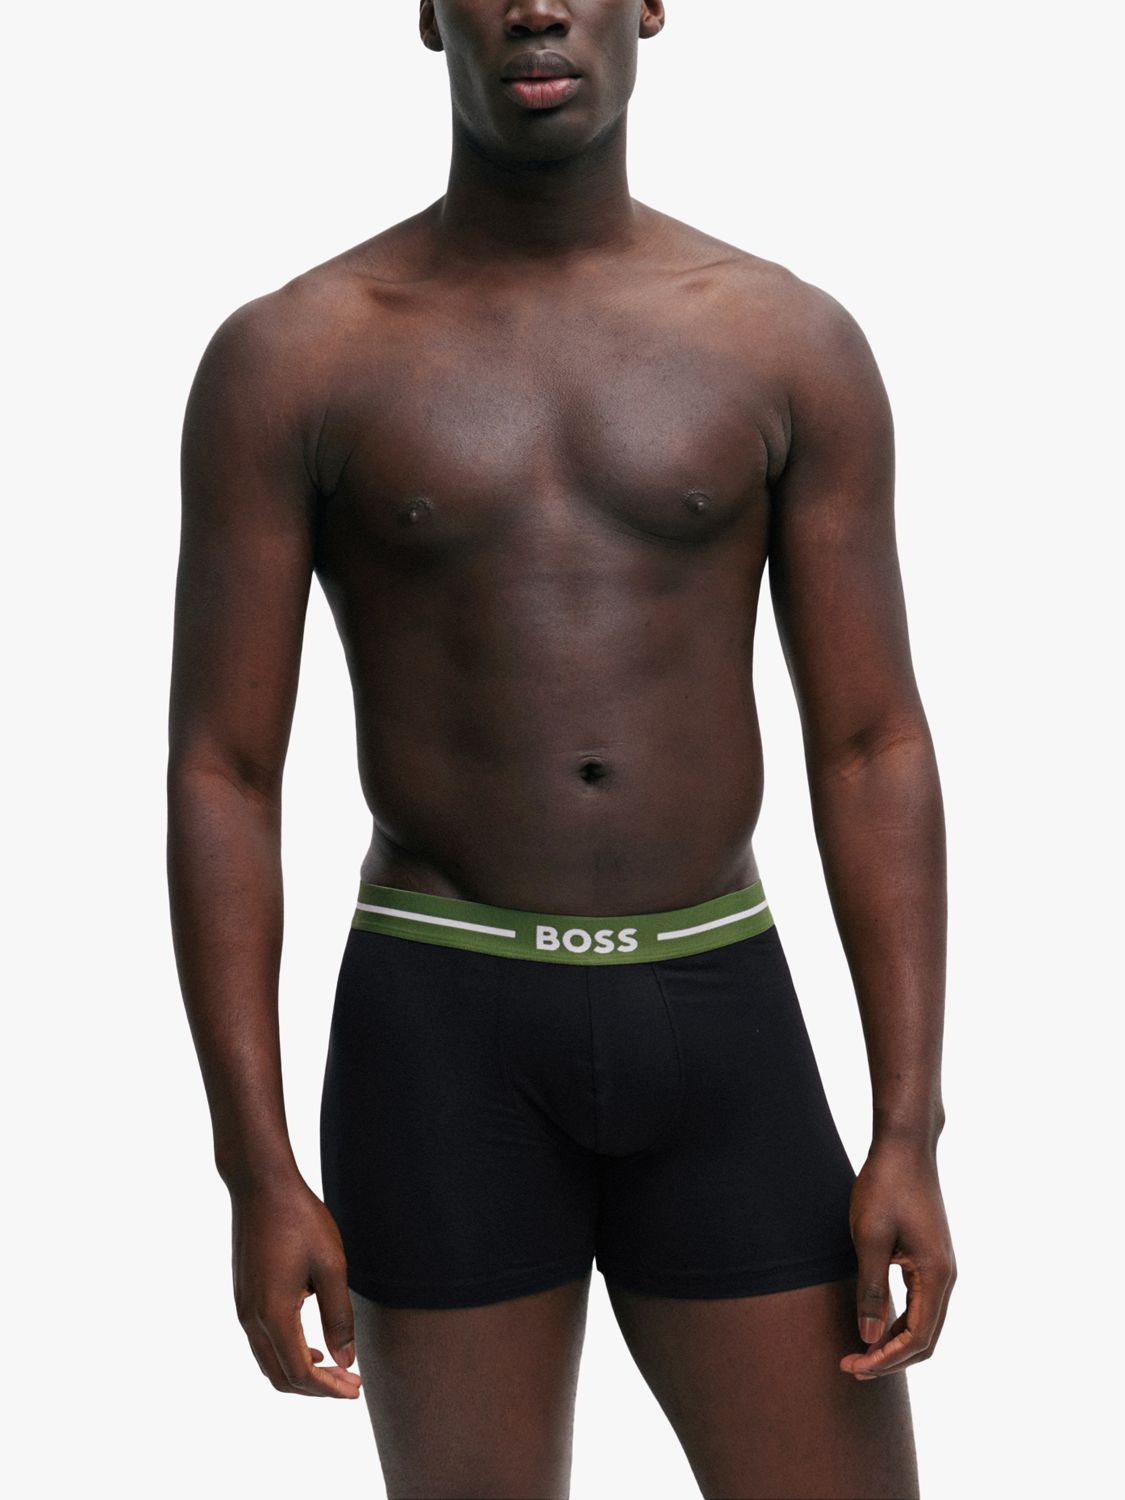 BOSS Logo Waist Cotton Stretch Trunks, Pack of 3, Black/Multi, XL